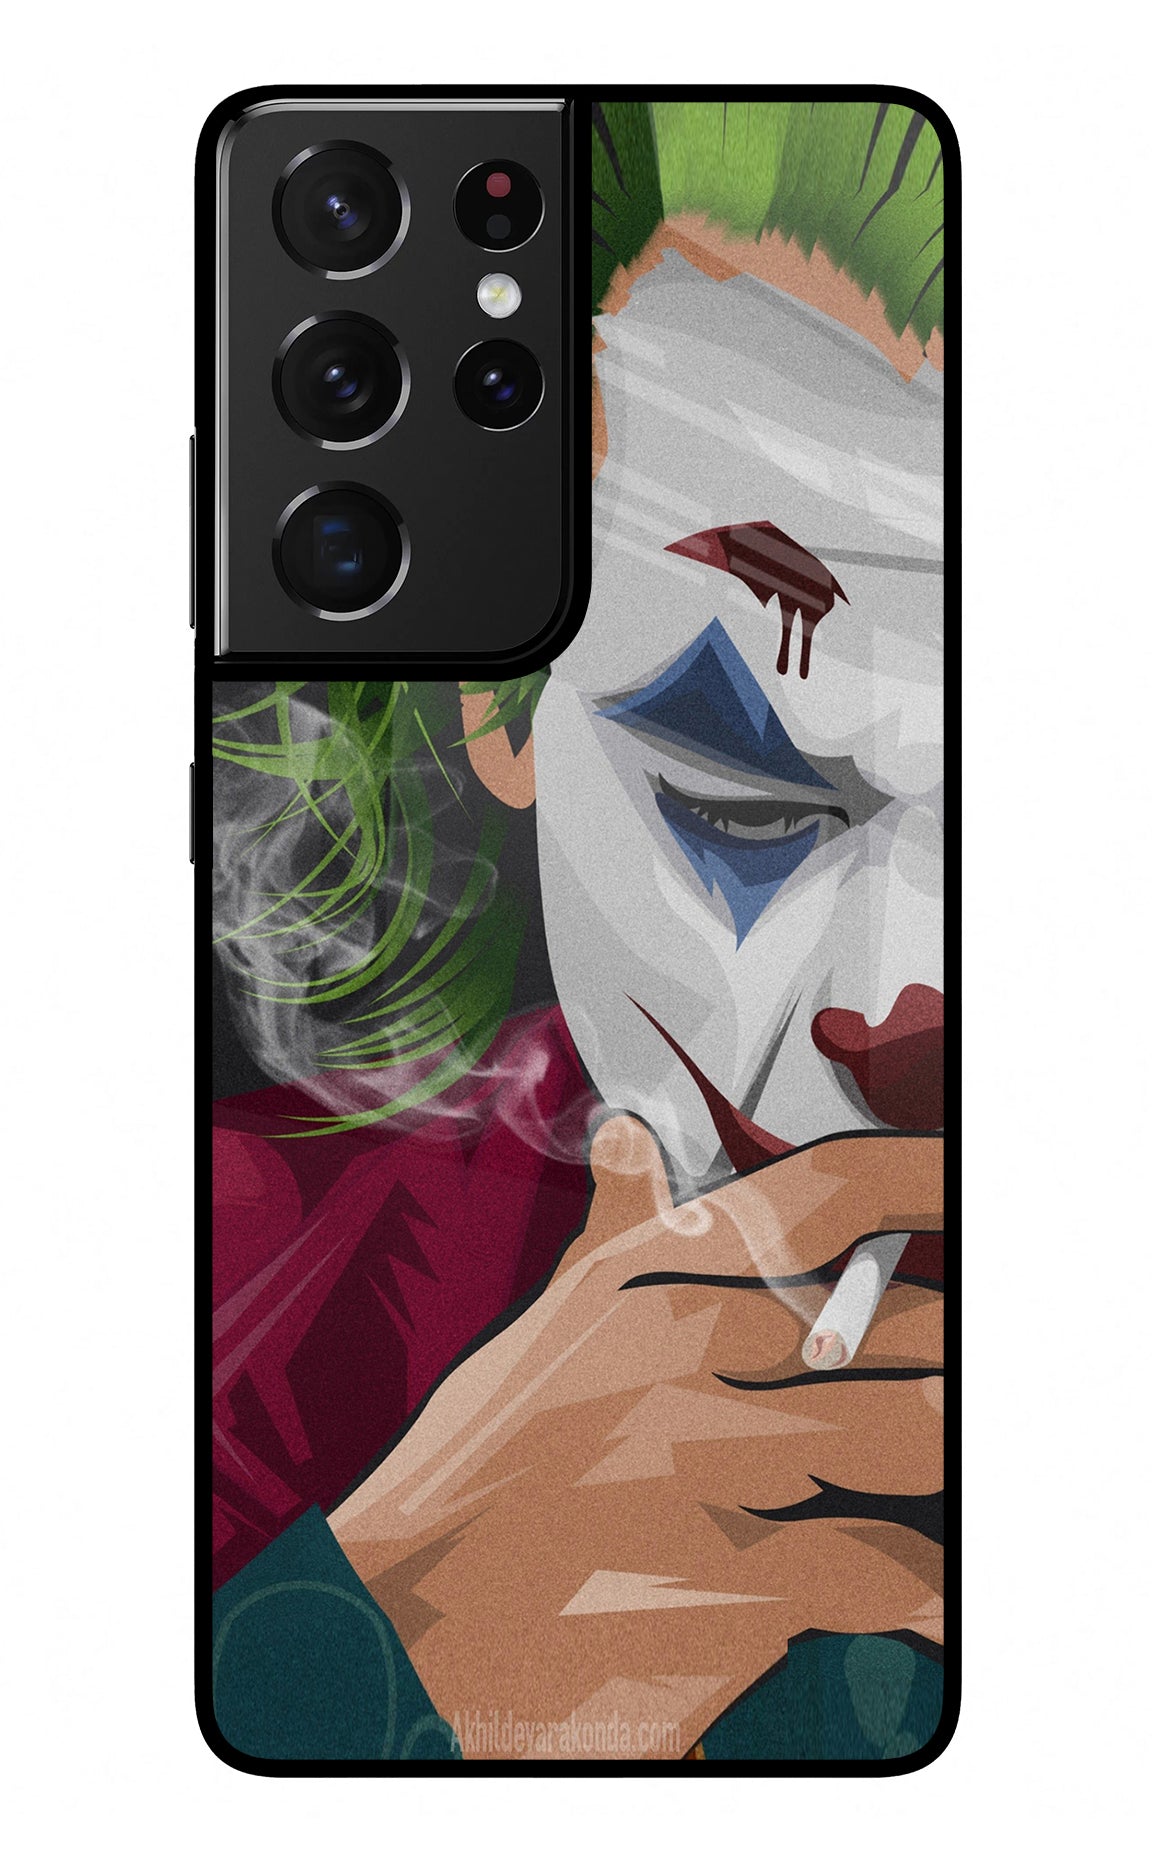 Joker Smoking Samsung S21 Ultra Back Cover